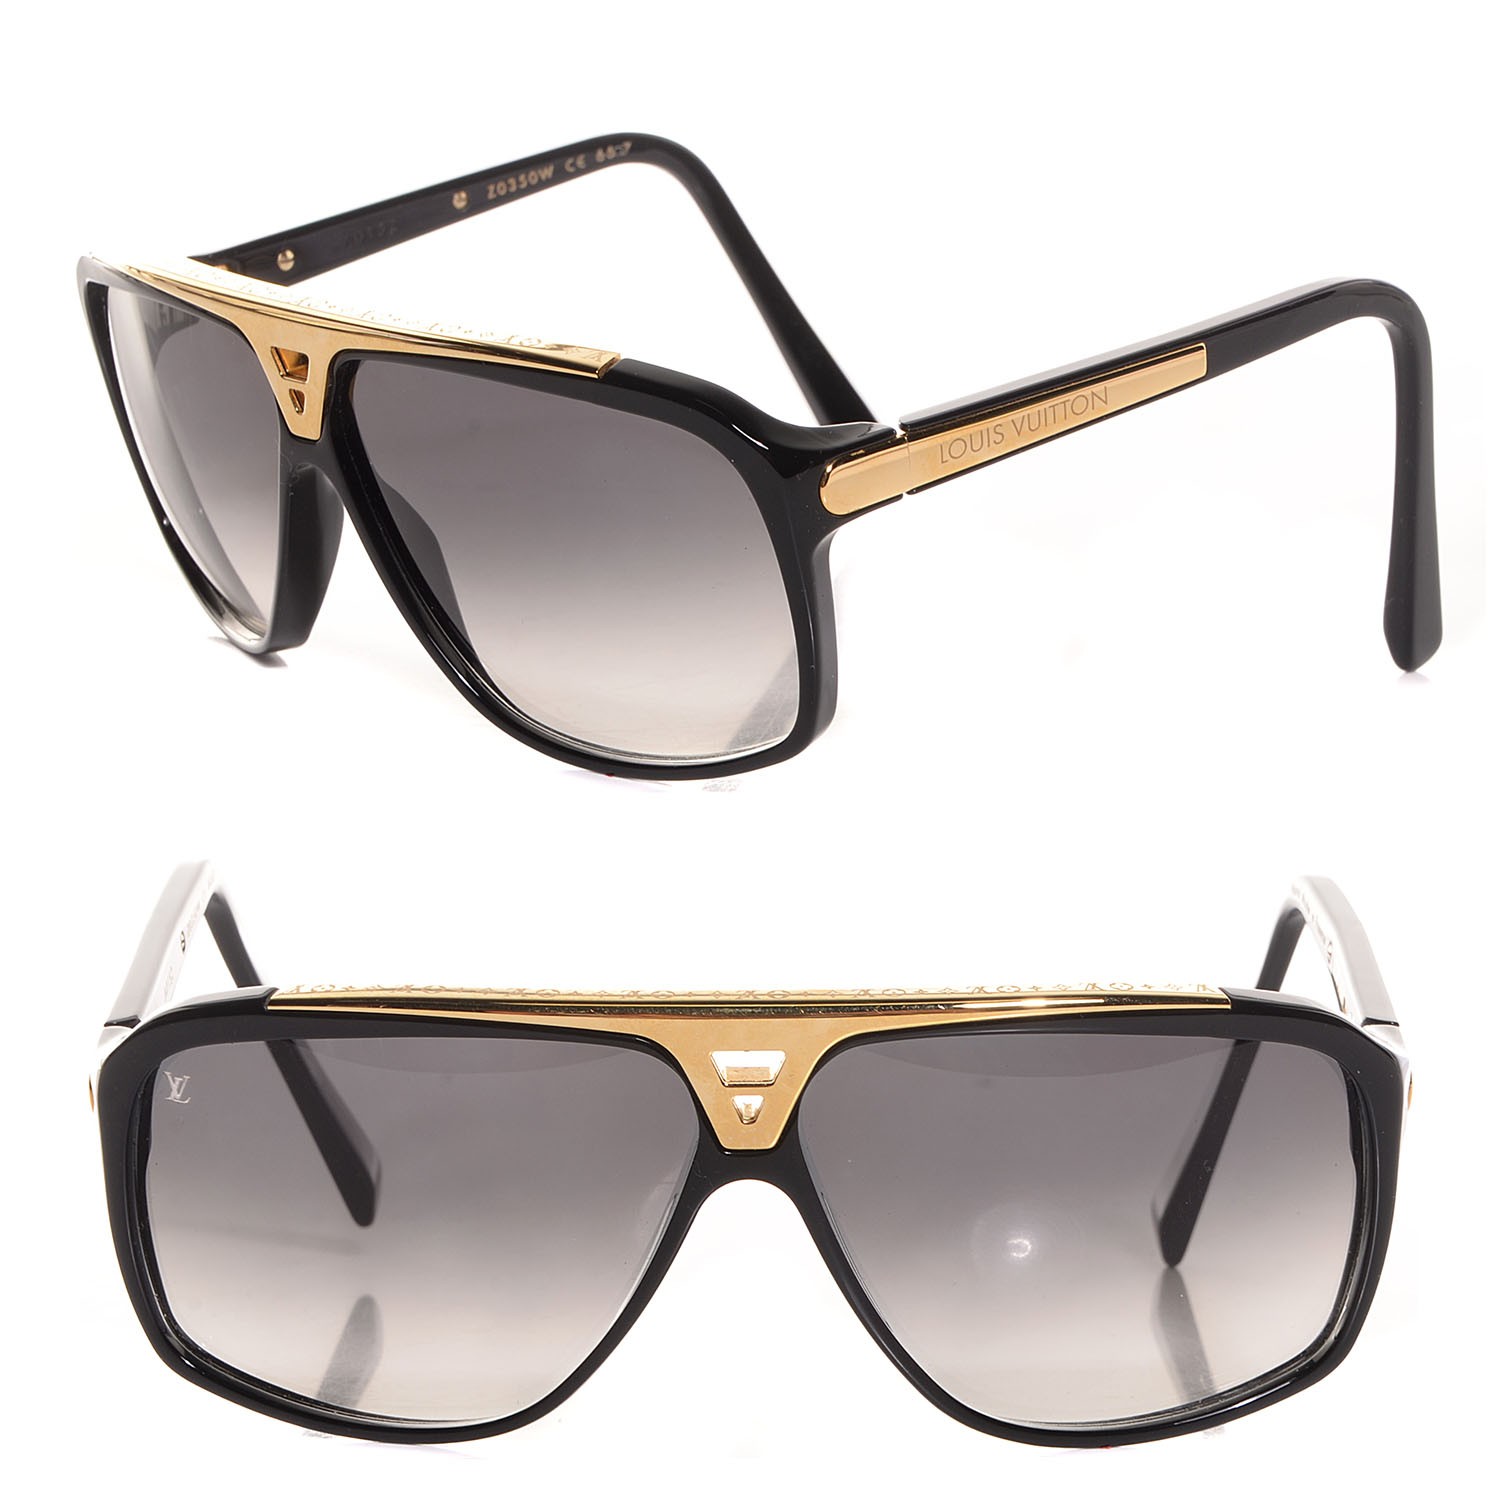 Louis Vuitton Men's Sunglasses With | semashow.com